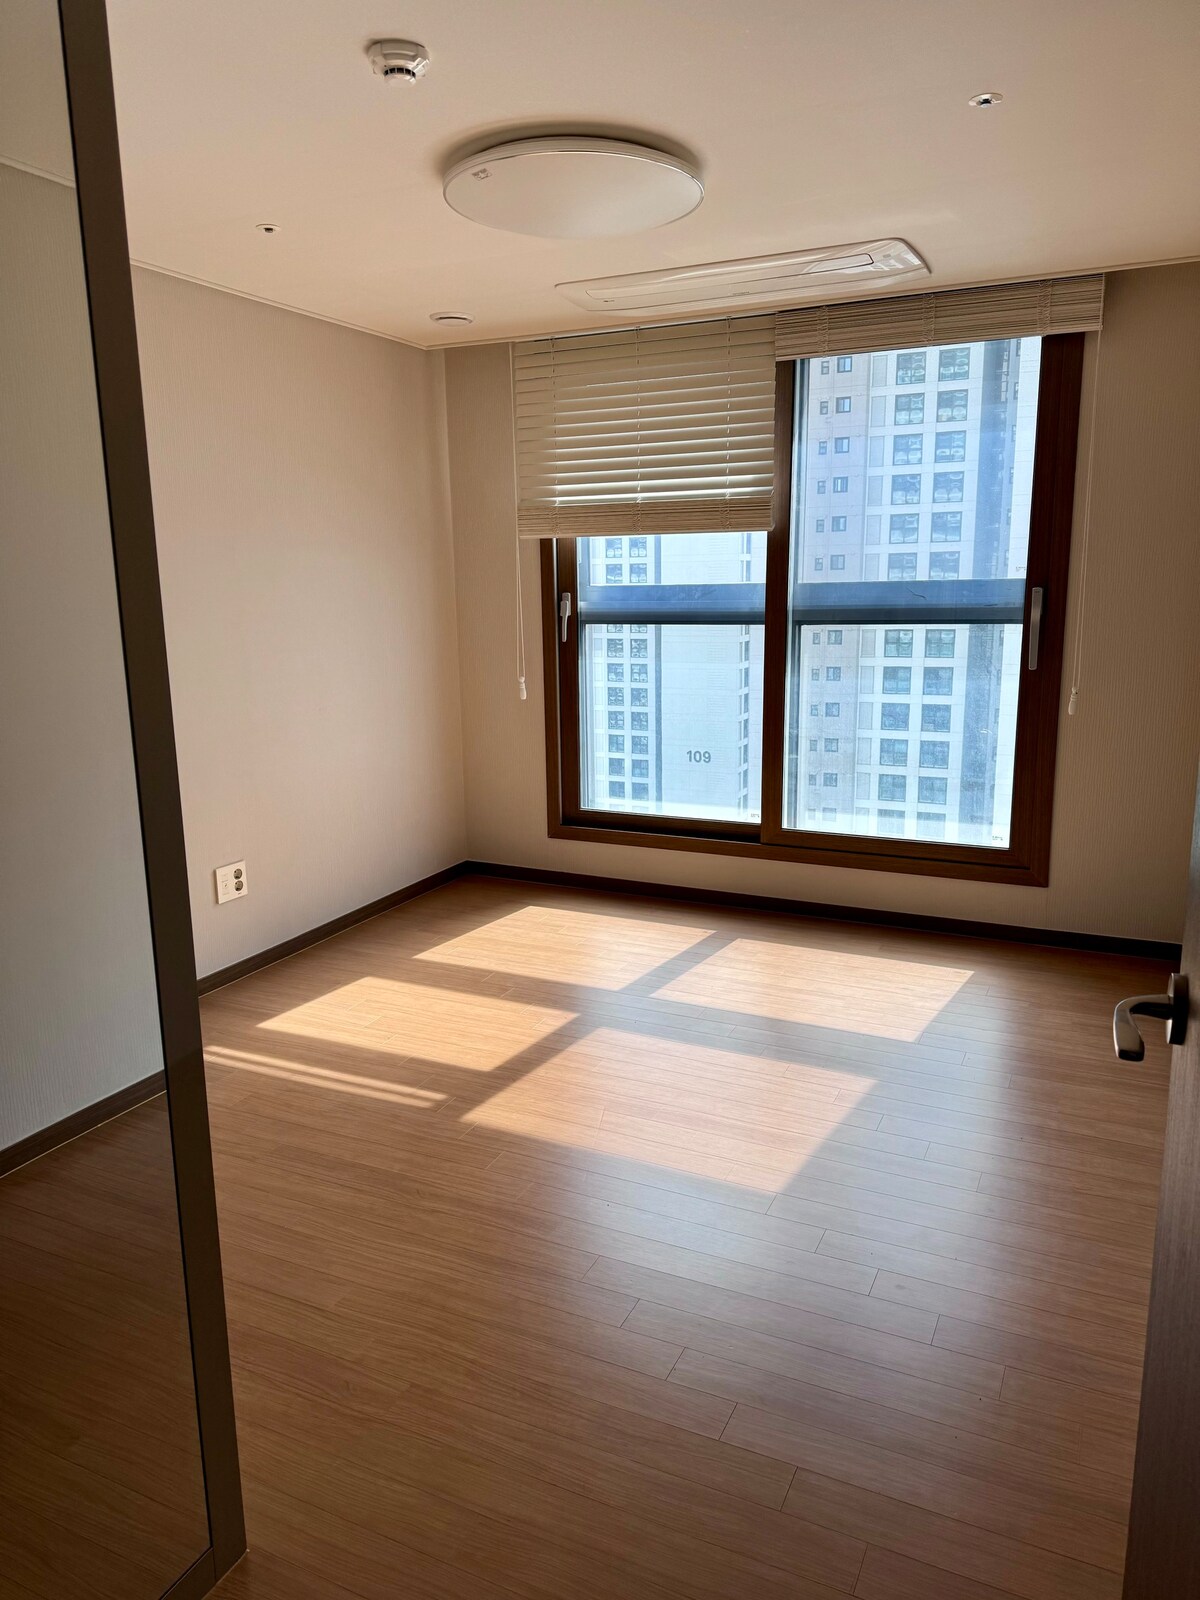 42 pyeong宽敞舒适的公寓